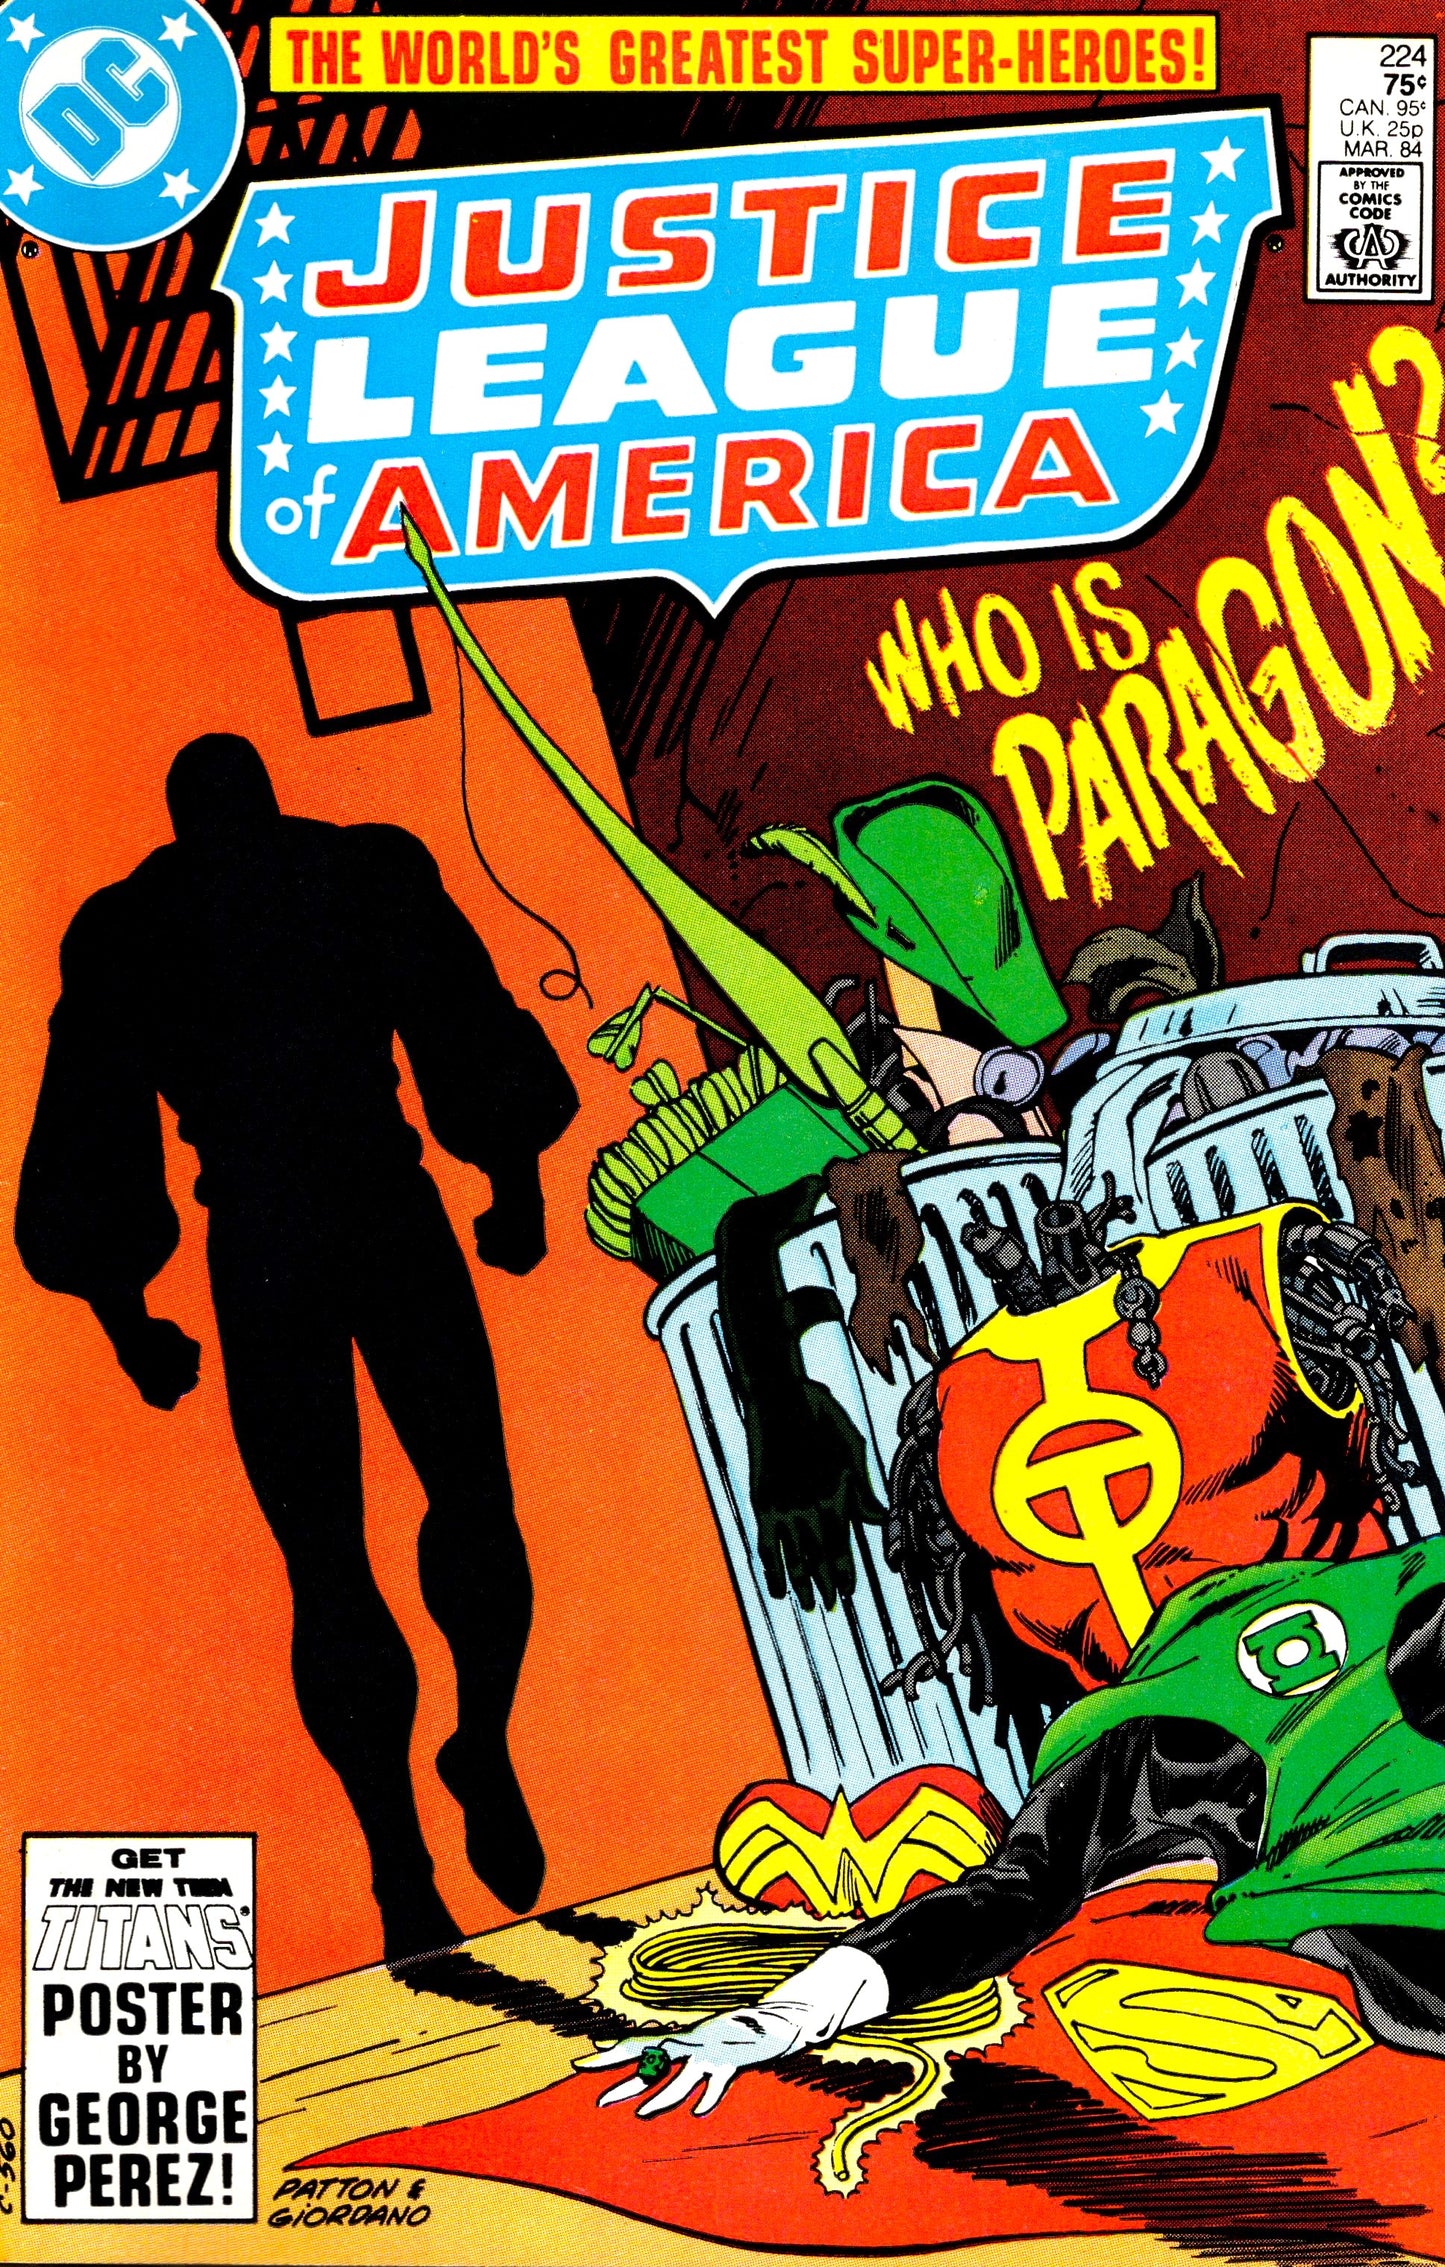 Justice League of America #224 (1960)